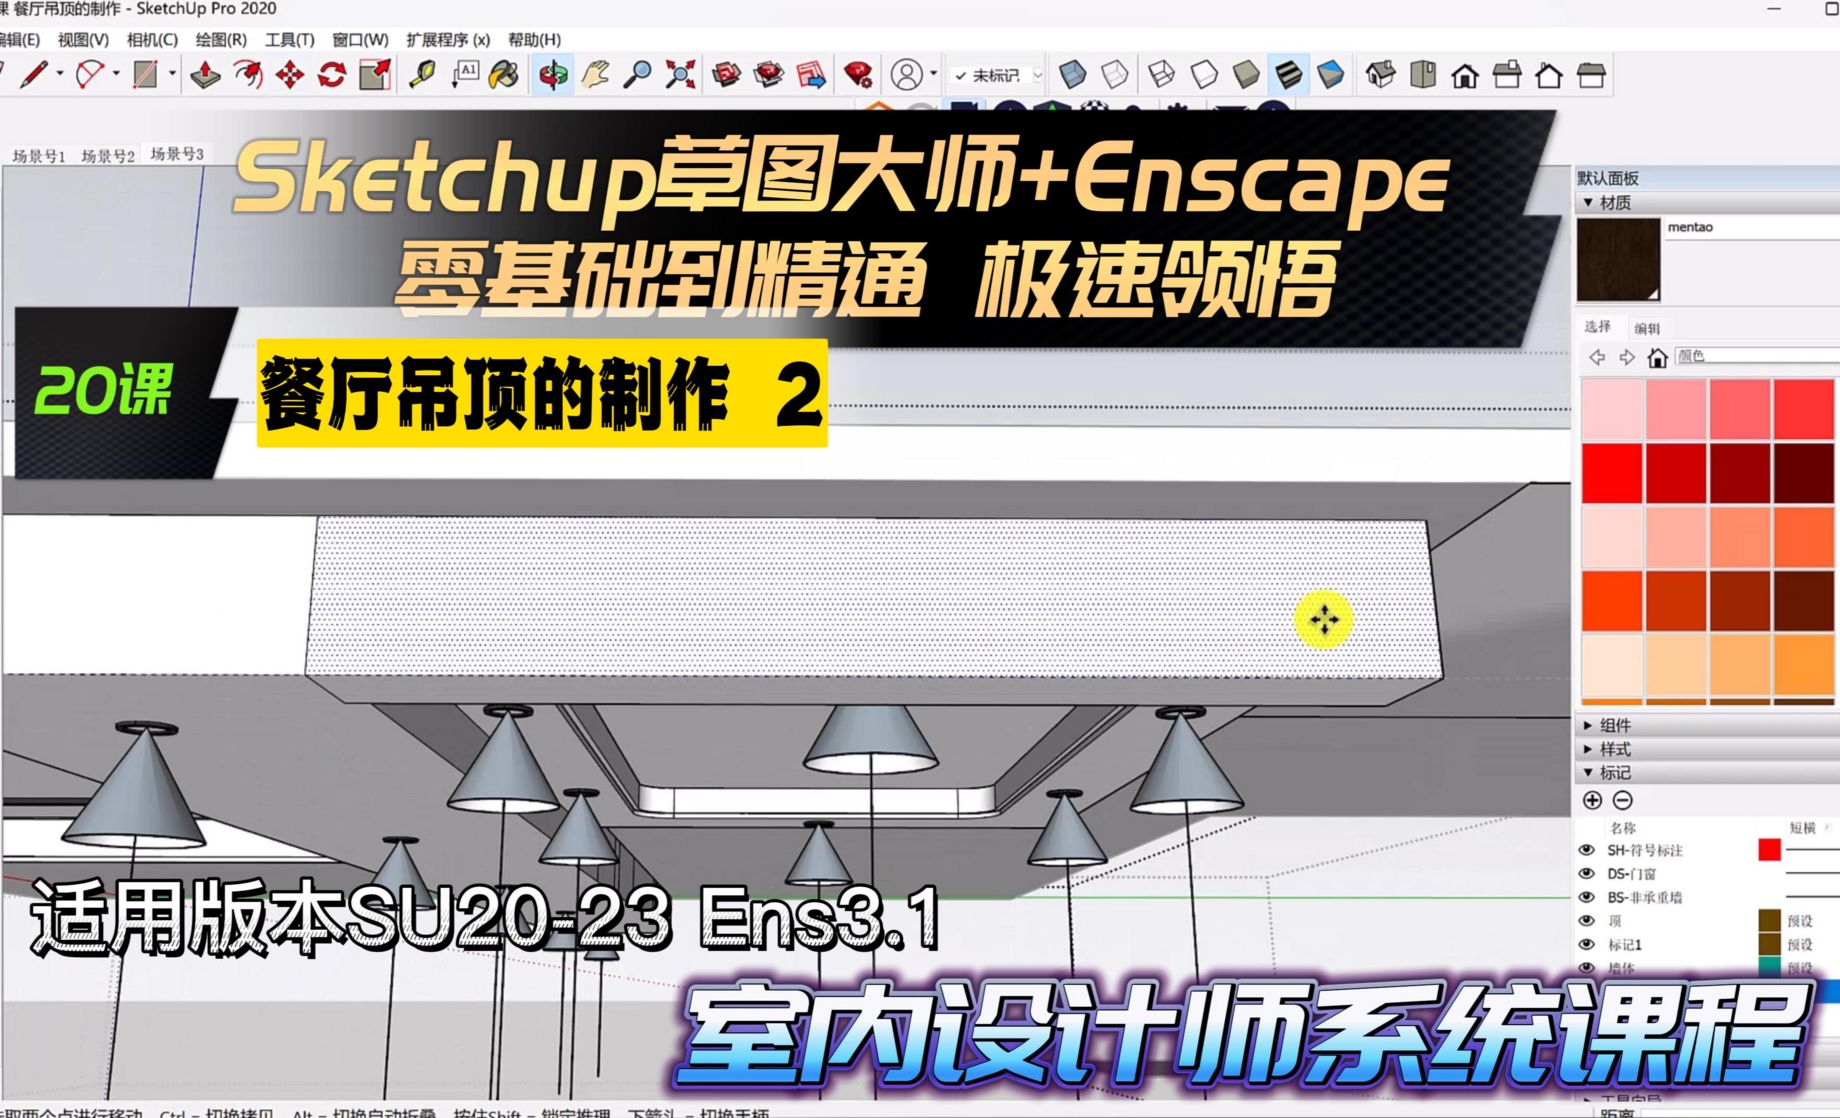 Sketchup+Enscape 室内设计极速领悟-餐厅吊顶的制作2